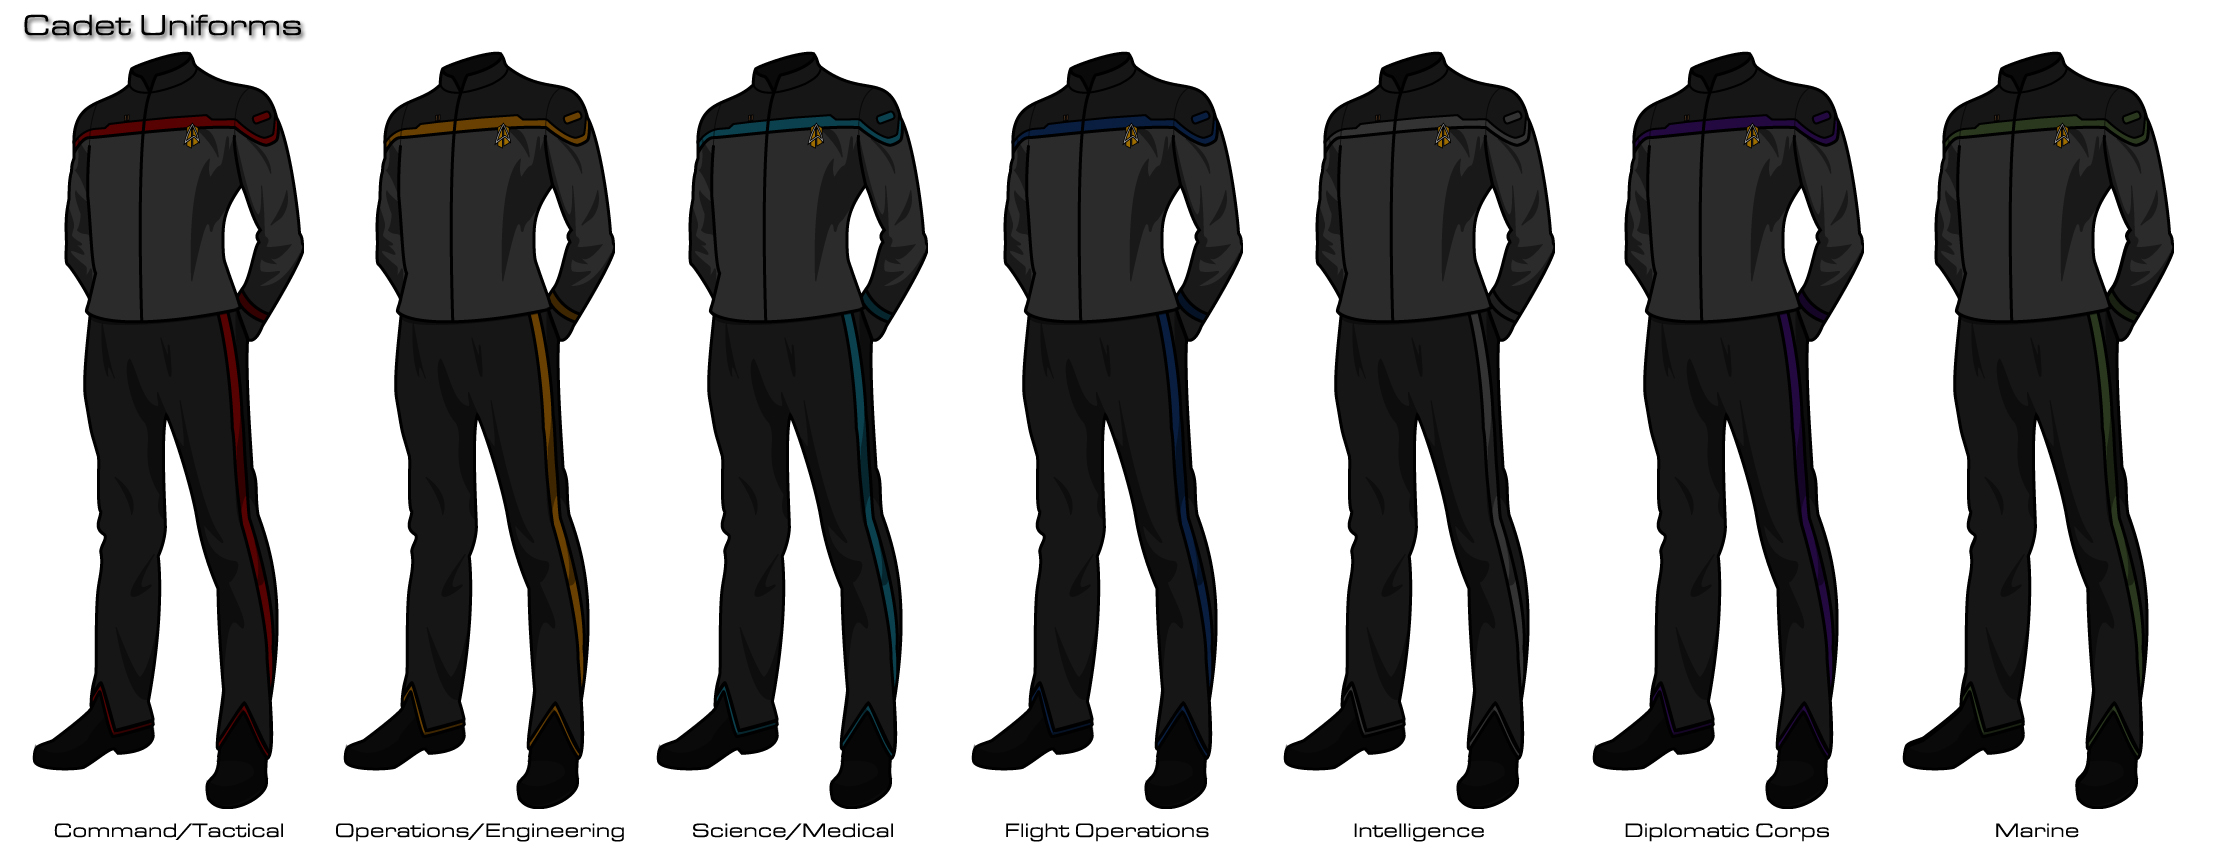 starfleet__2409__uniforms___cadet_uniforms_by_haphazartgeek-d7blbww.jpg